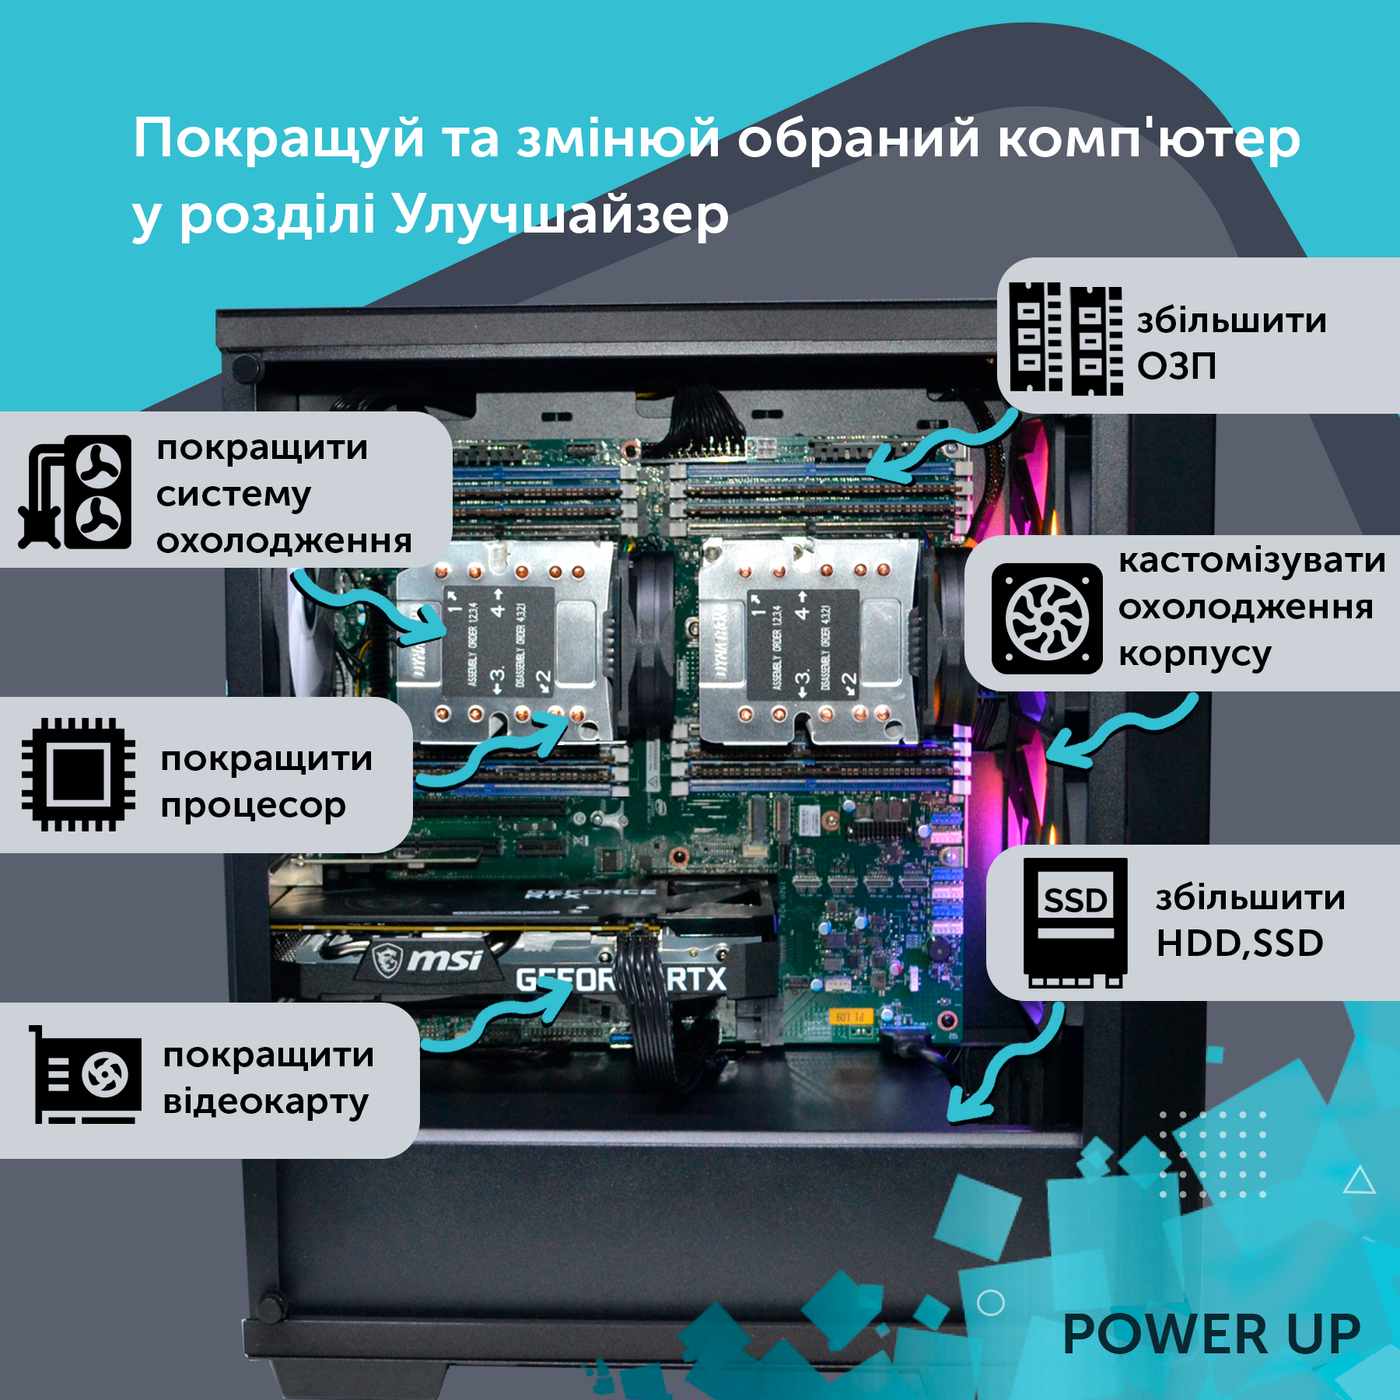 Рабочая станция PowerUp Desktop #385 Core i9 14900K/32 GB/SSD 512GB/GeForce RTX 4070 Super 12GB